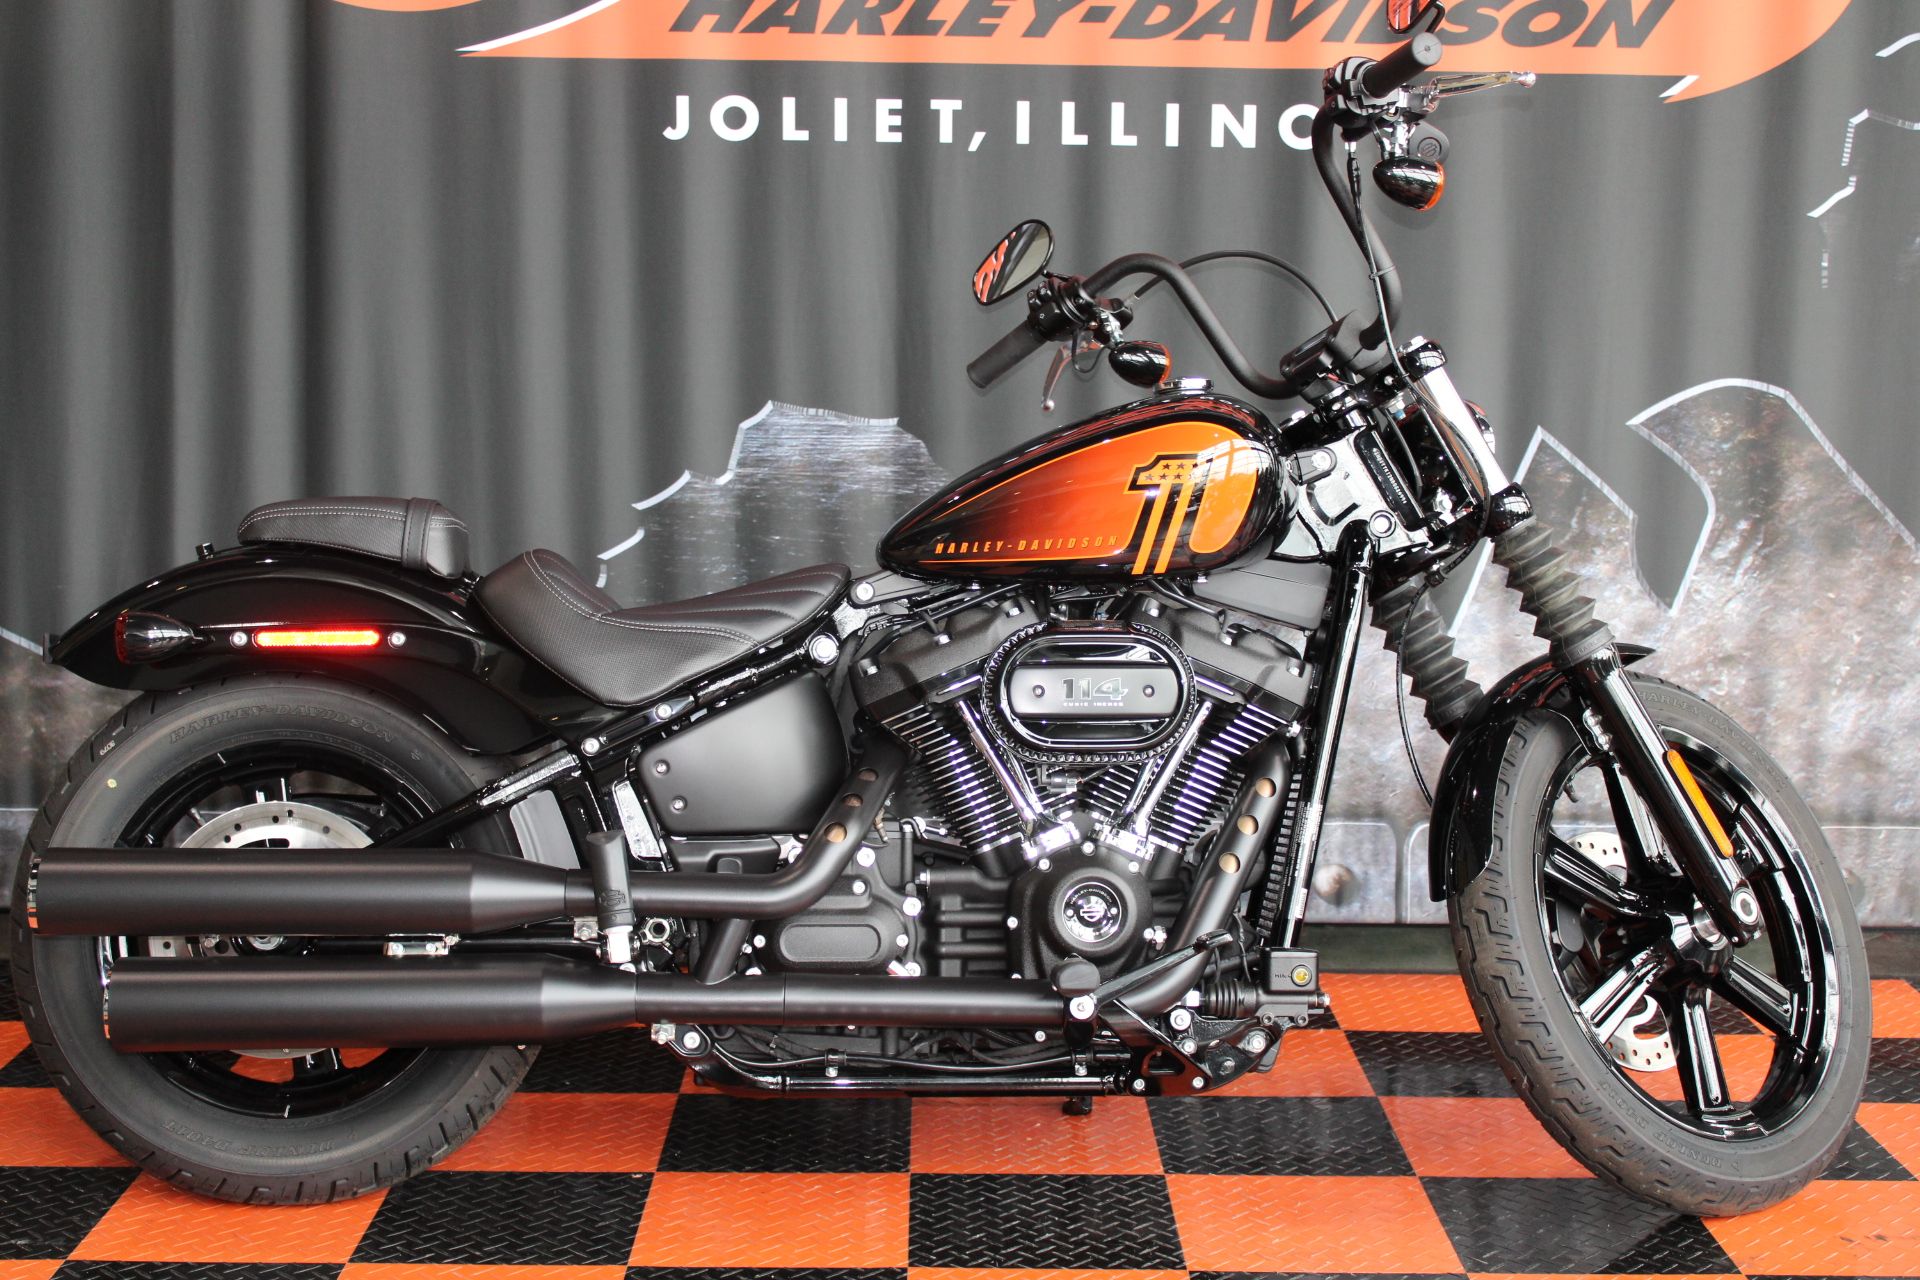 2022 Harley-Davidson Street Bob® 114 in Shorewood, Illinois - Photo 2